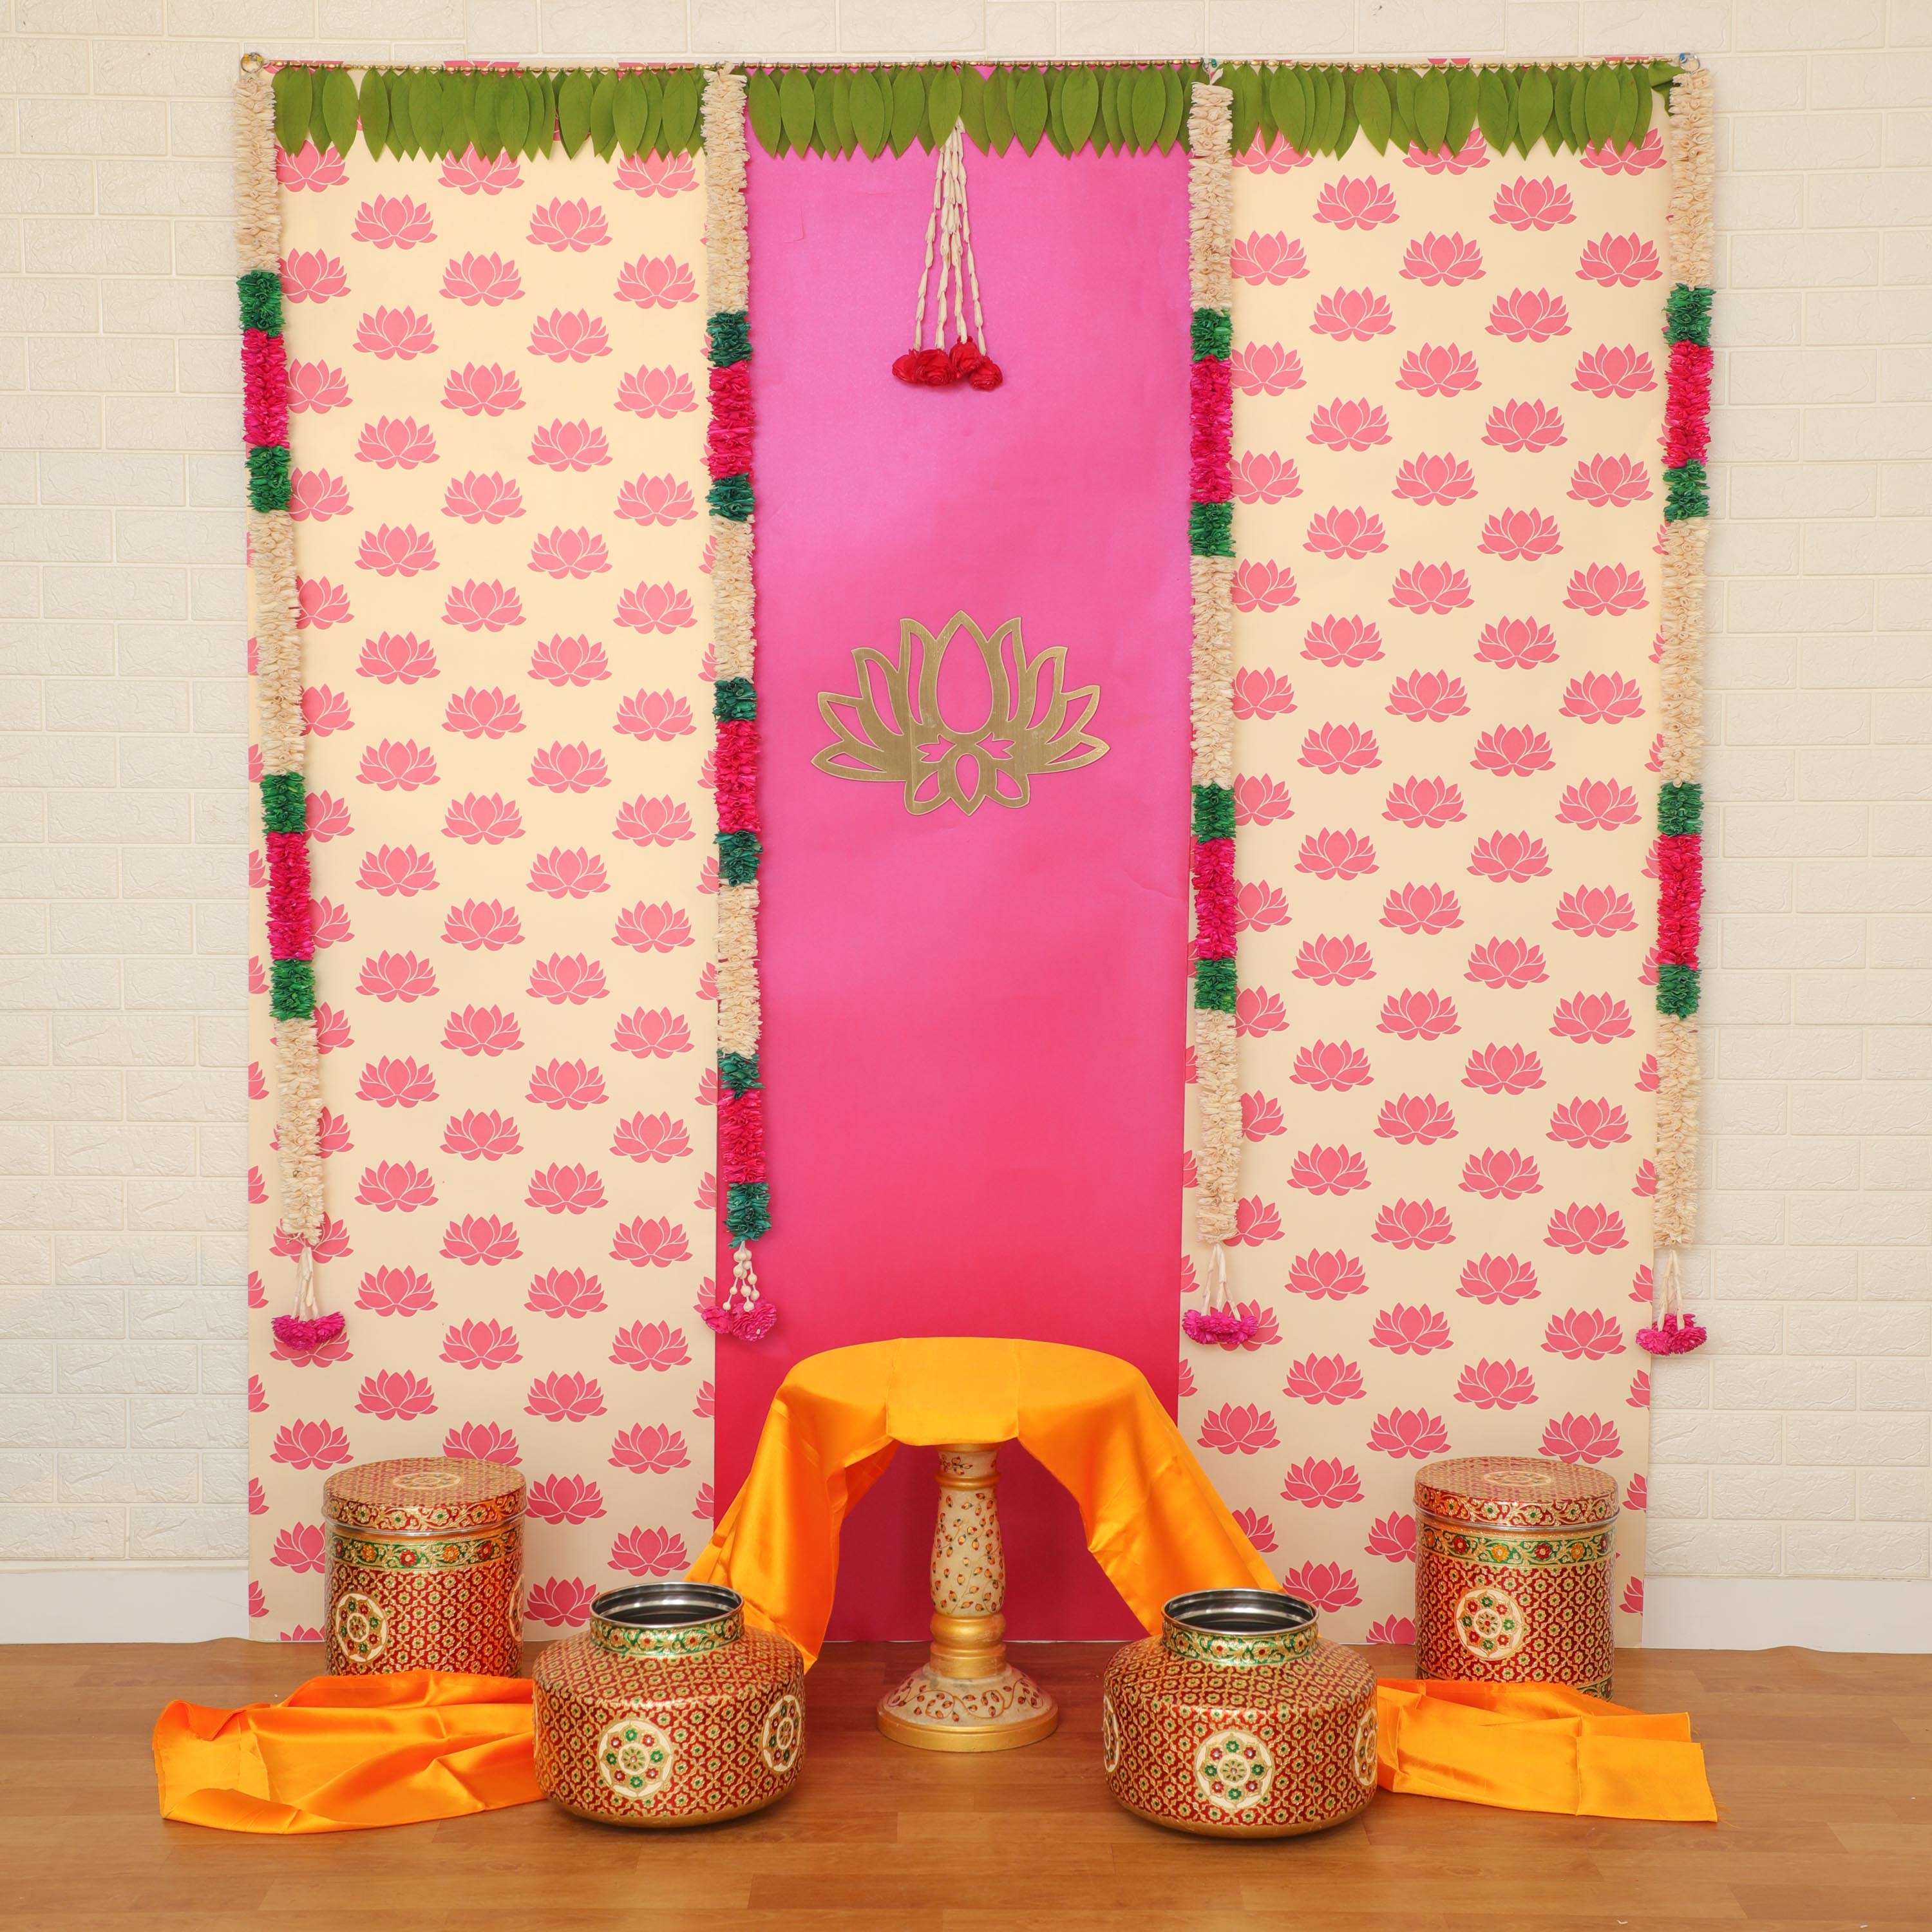 Varalakshmi Vratham pooja decoration kits online in the USA